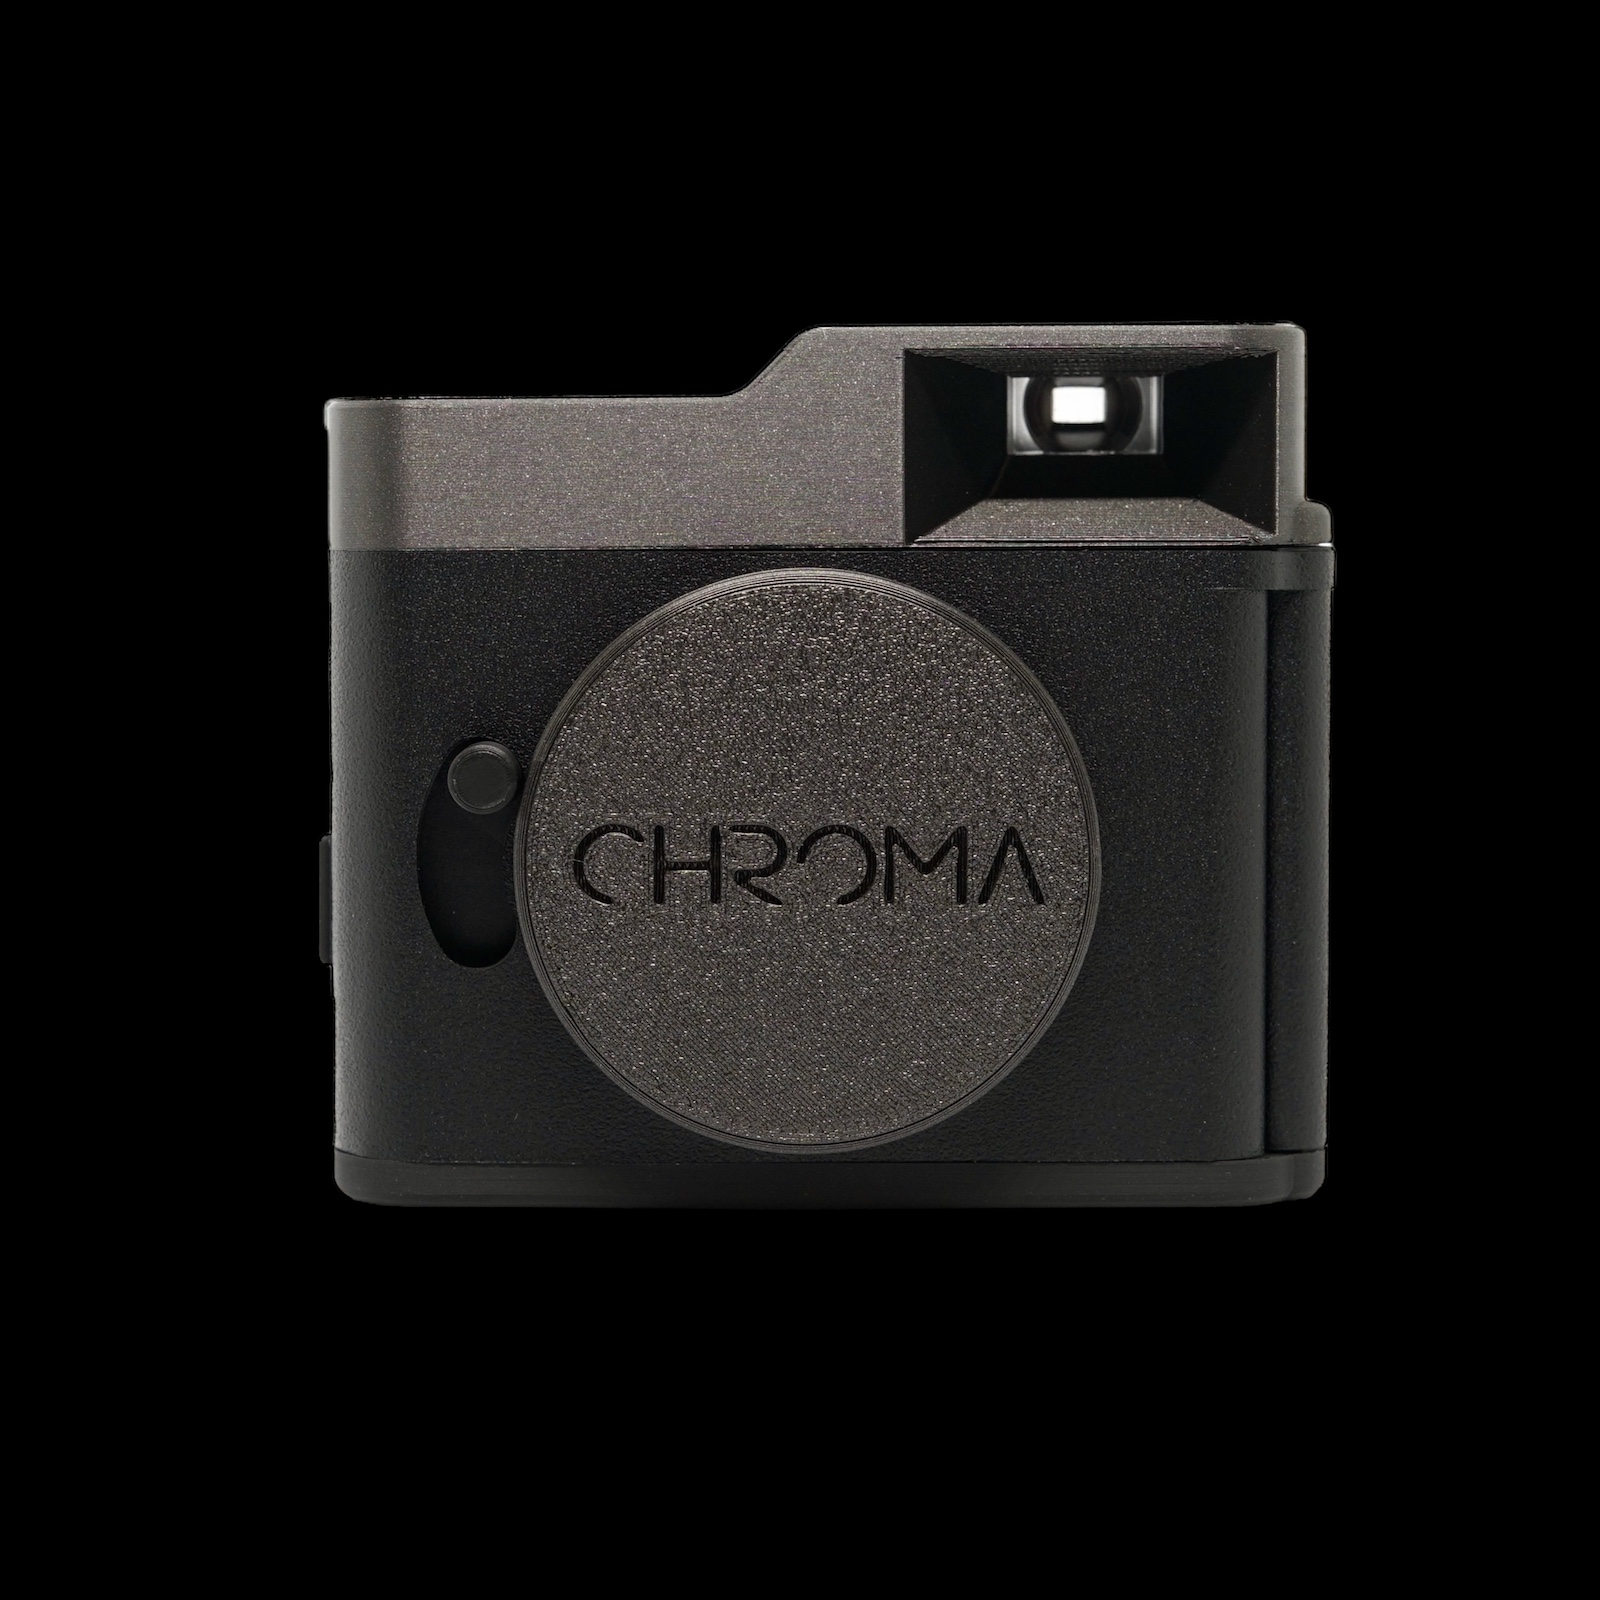 Chroma-Click-35mm-compact-film-camera-1.jpg